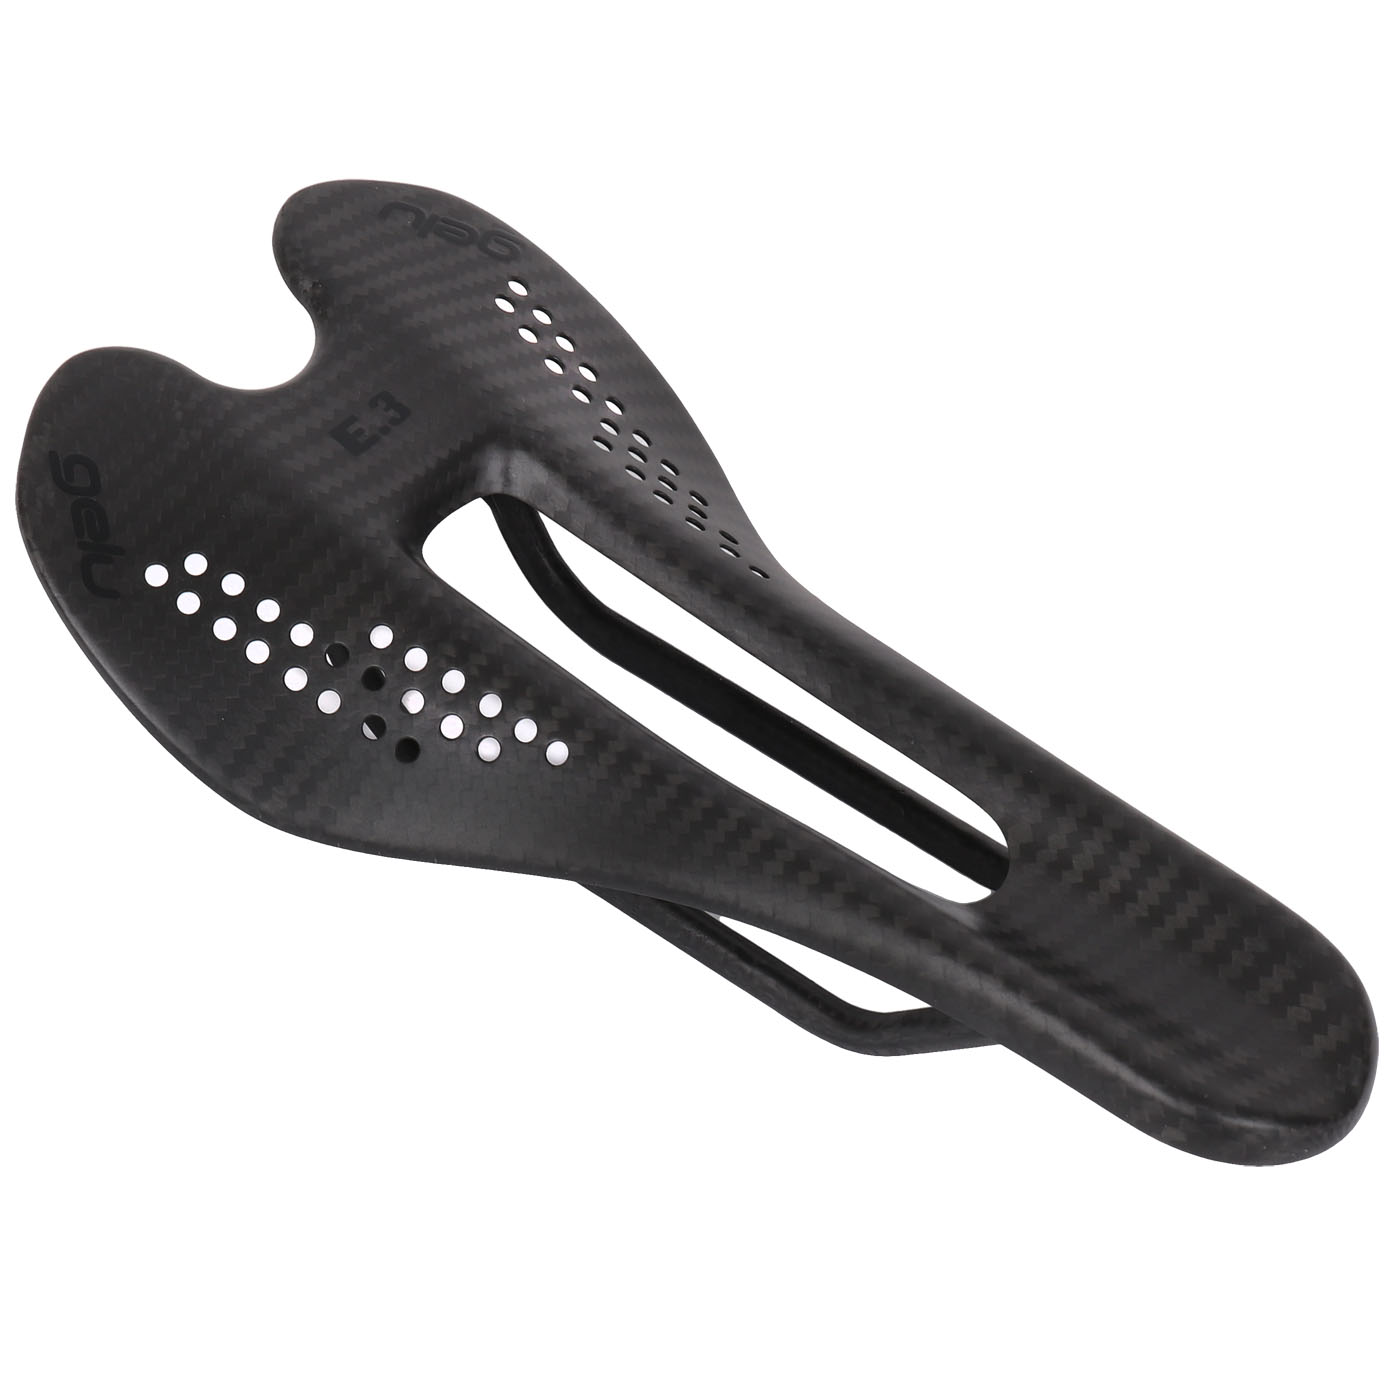 Productfoto van Gelu E3 Carbon Saddle with Punctured Top - black Logos